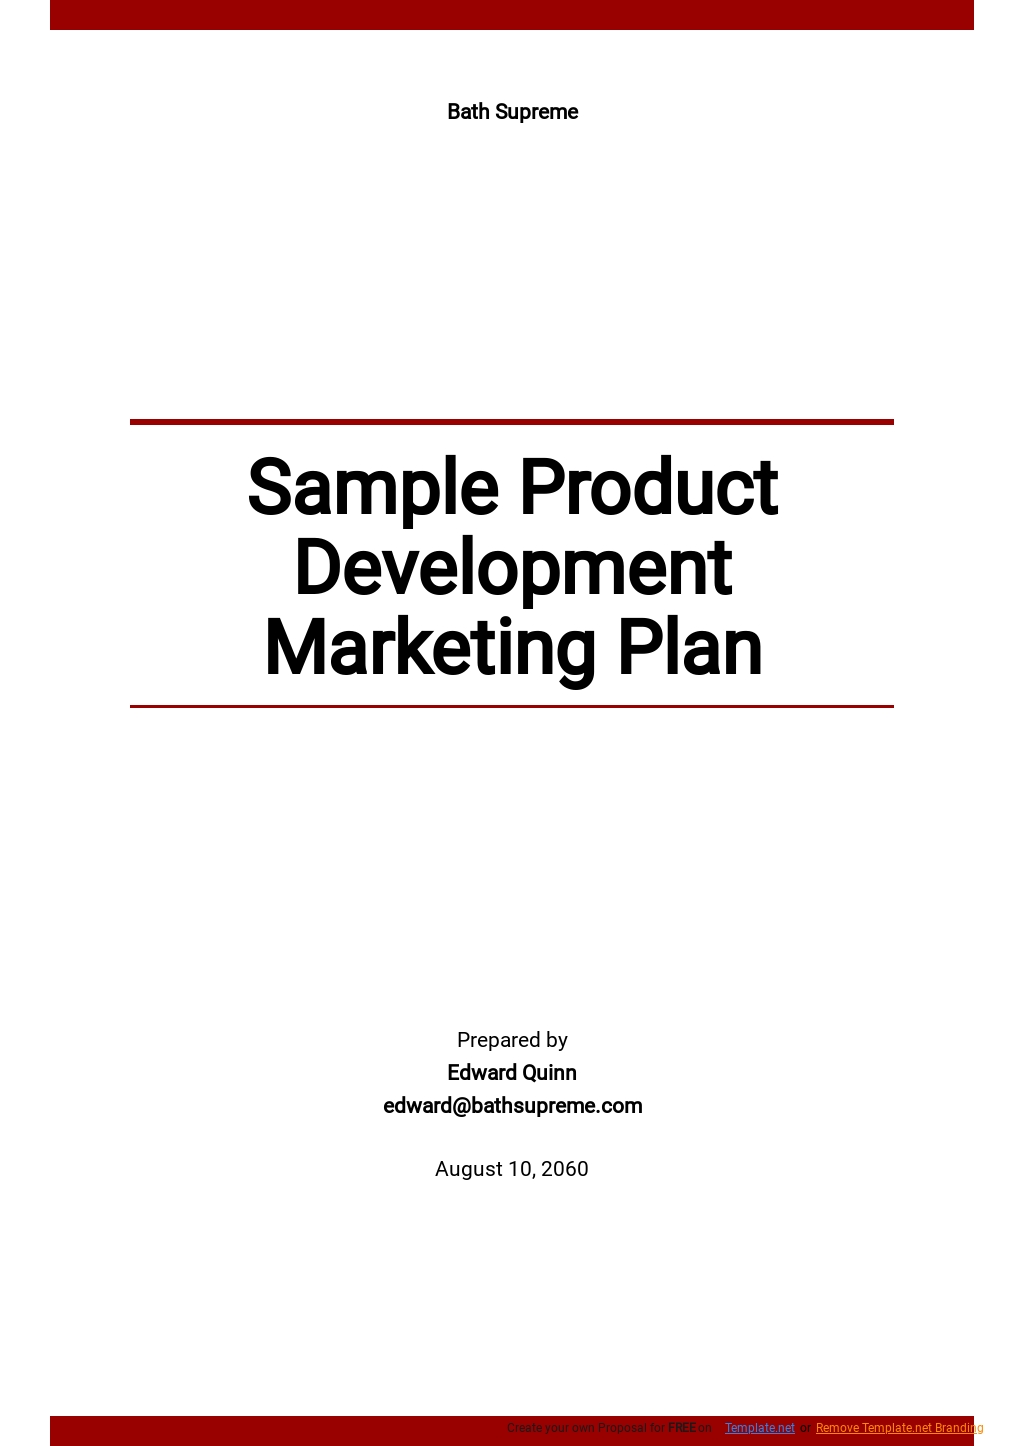 Sample Product Development Marketing Plan Template .jpe